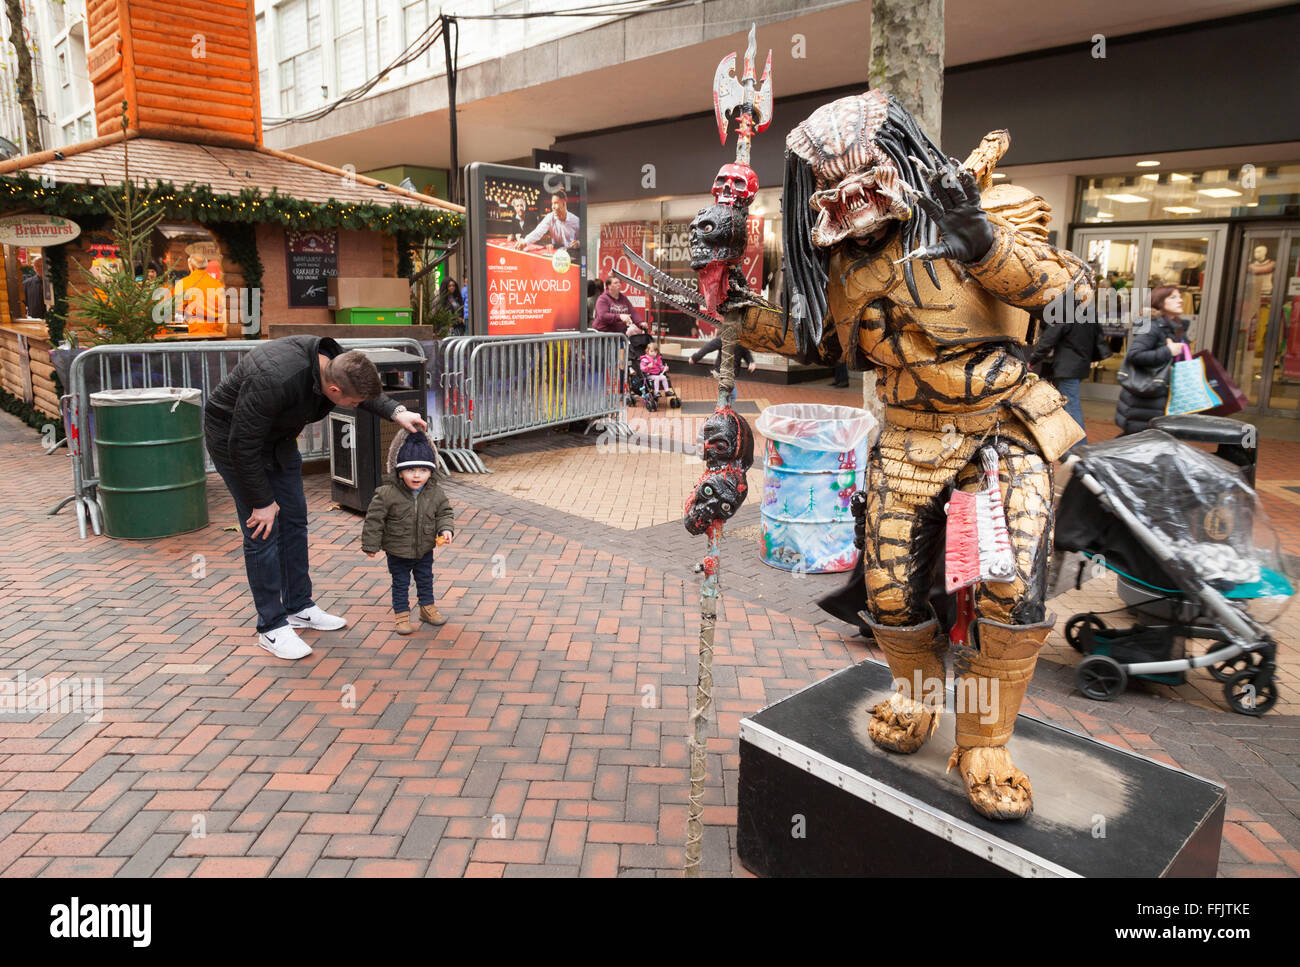 Artiste de rue dans un costume d'alien Predator, New Street, Birmingham UK Banque D'Images